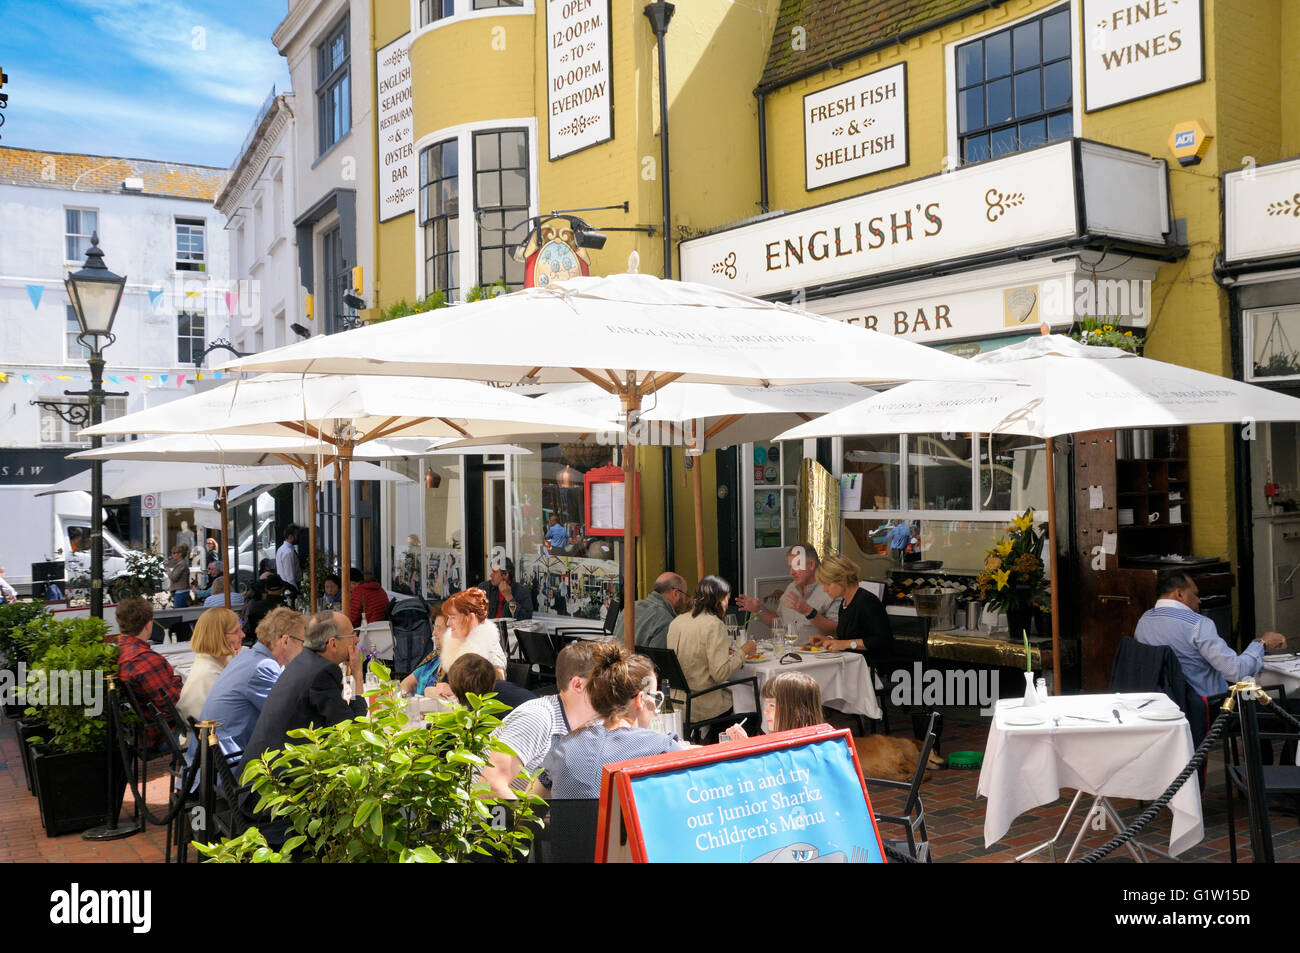 English's seafood restaurant & bar à huîtres, les ruelles, Brighton, East Sussex, England, UK Banque D'Images